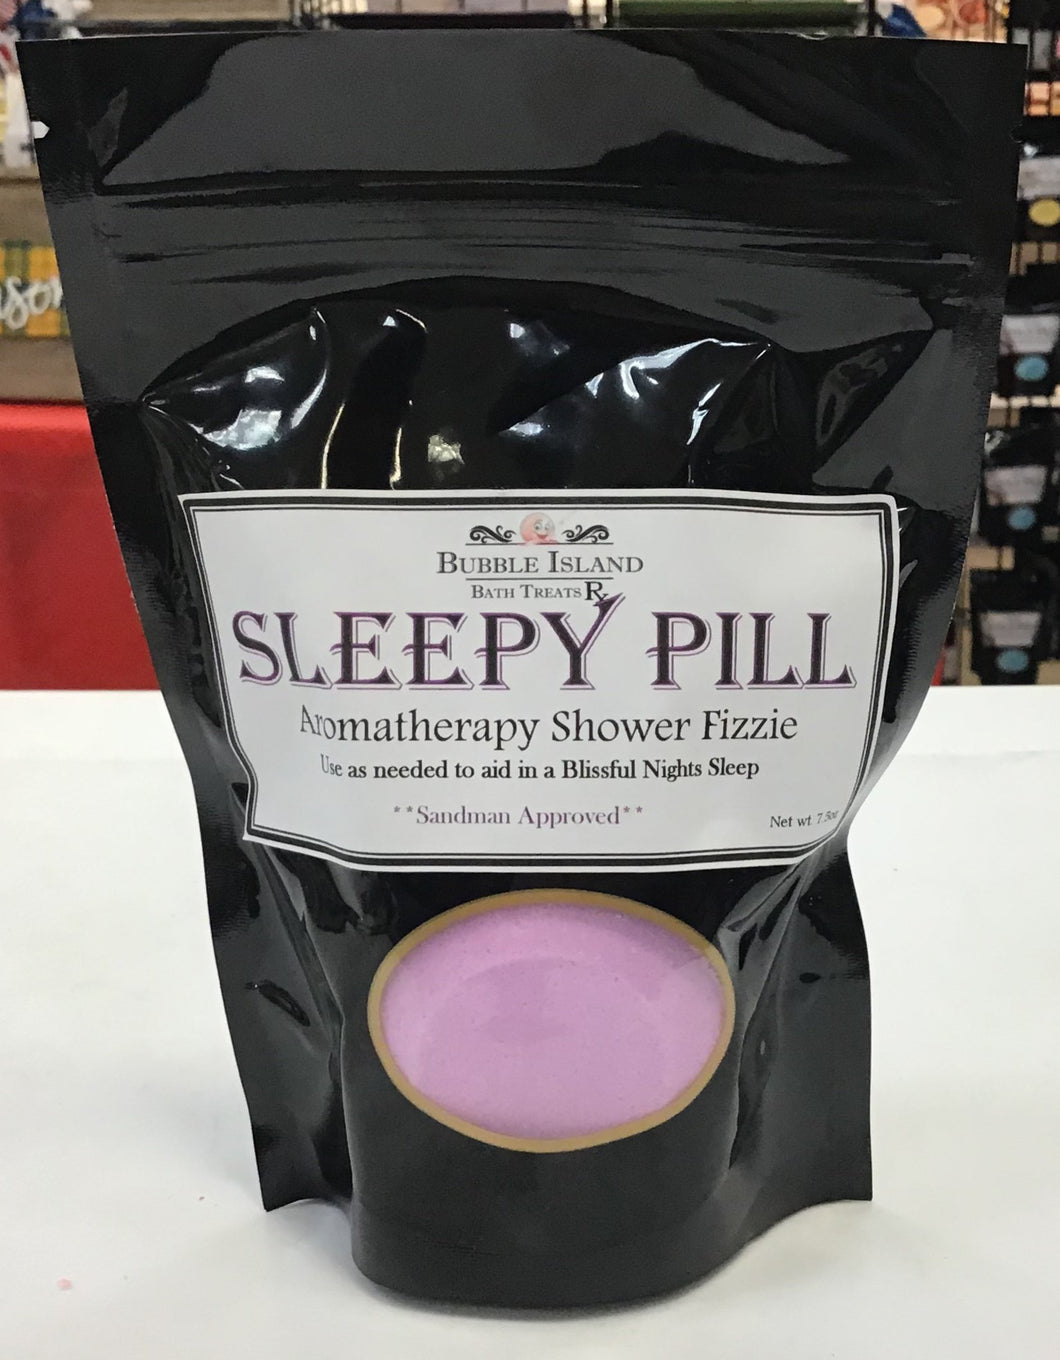 Bubble Island Sleepy Pill Aromatherapy Shower Fizzie